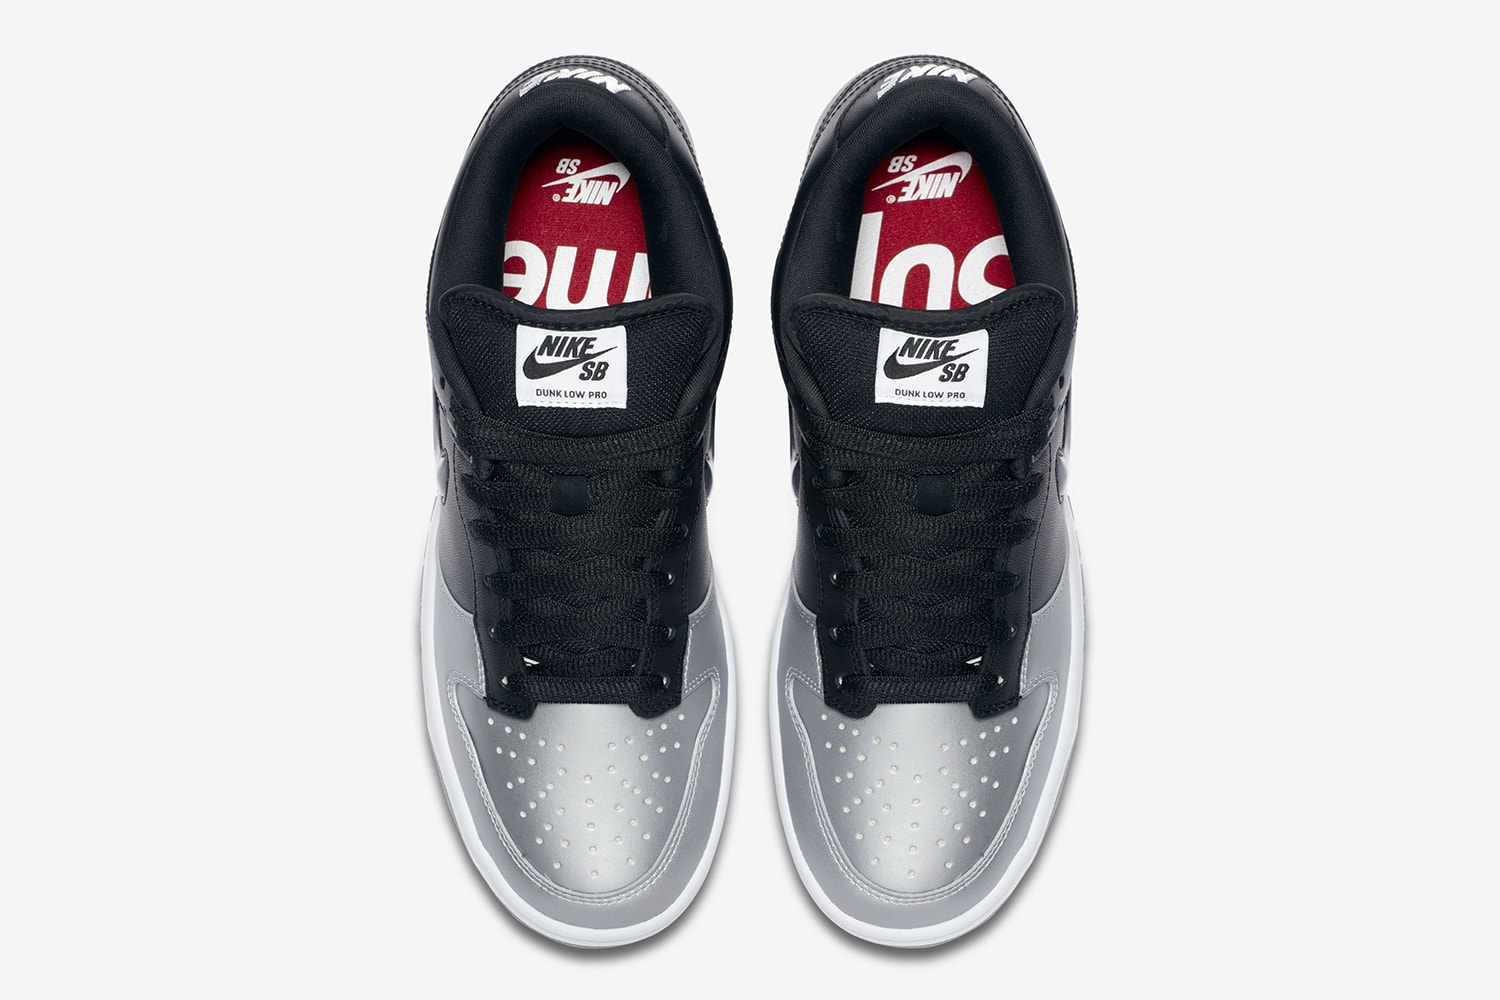 Supreme x Nike SB Dunk Low "Black/Metallic Silver" fall/winter 2019 collection collaboration swoosh logo official photos